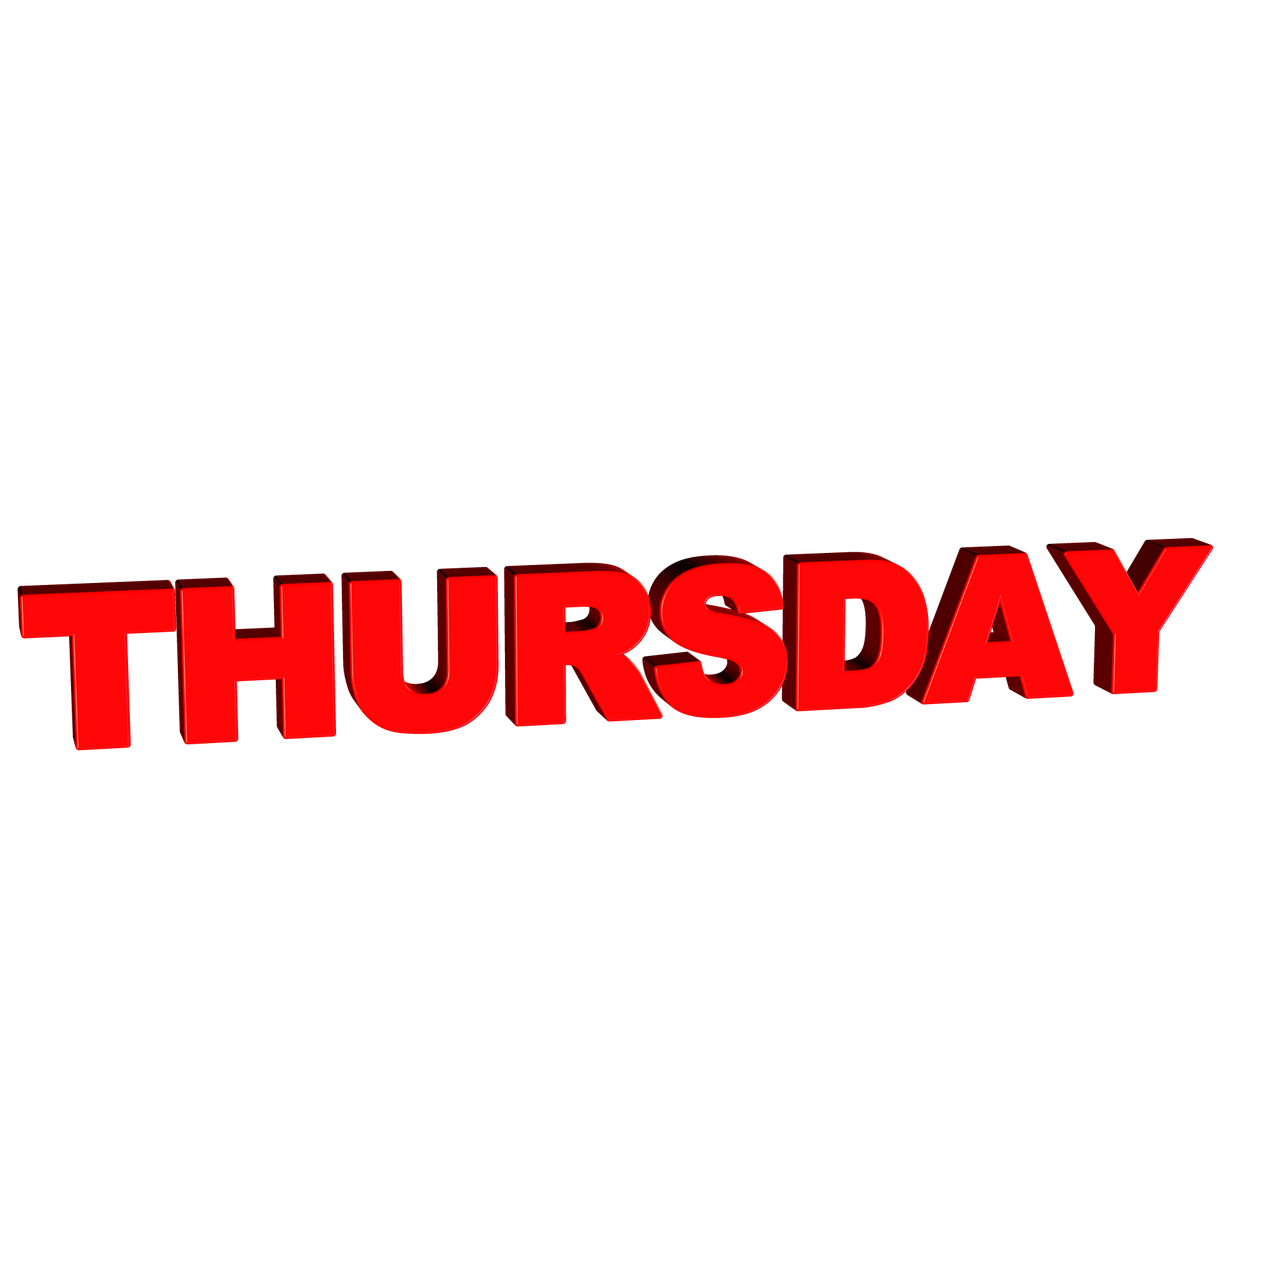 thursday-day-week-calendar-word-free-image-from-needpix